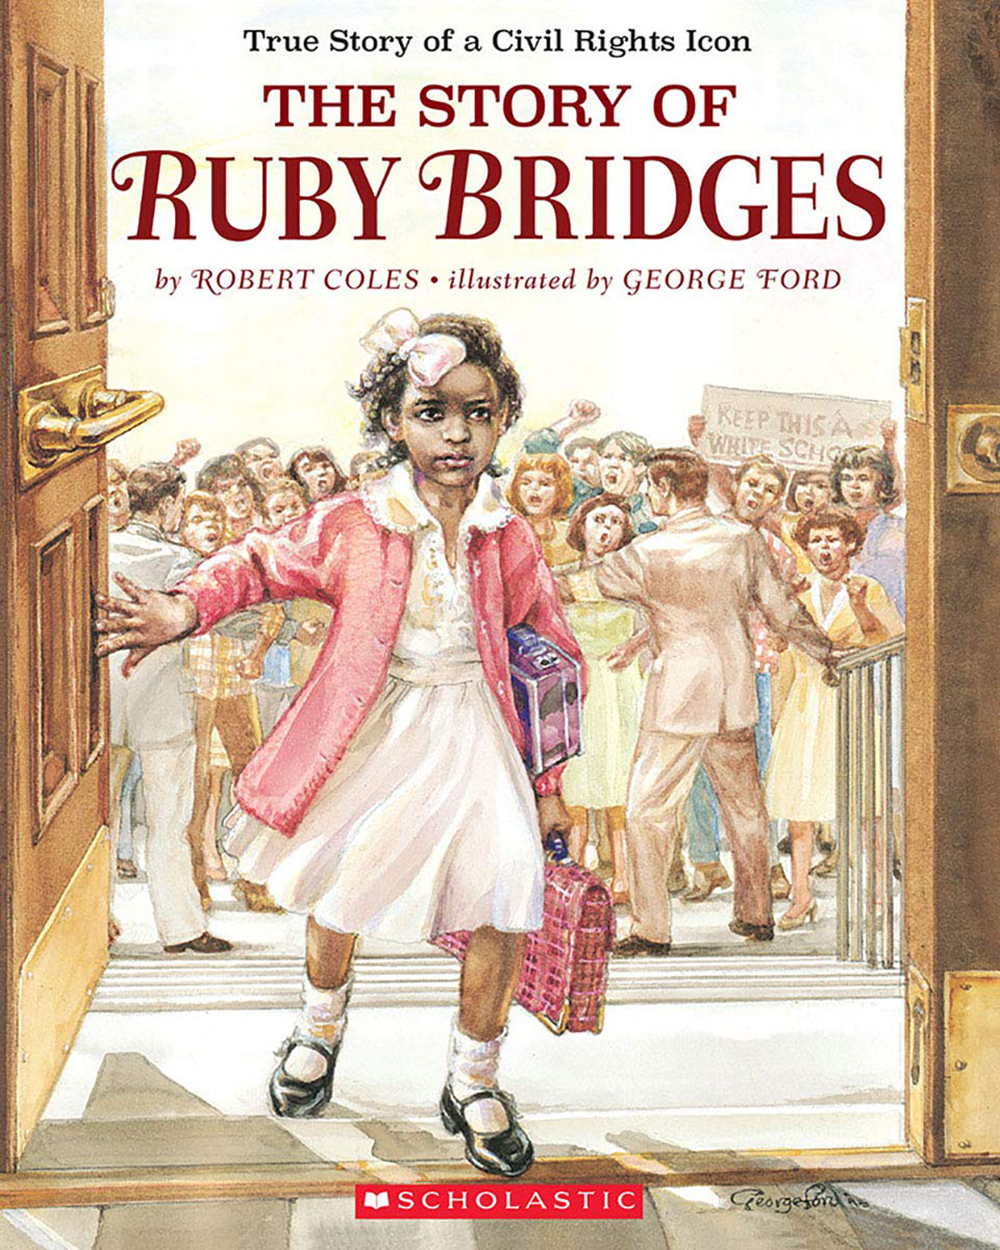 THE STORYOF RUBY BRIDGES